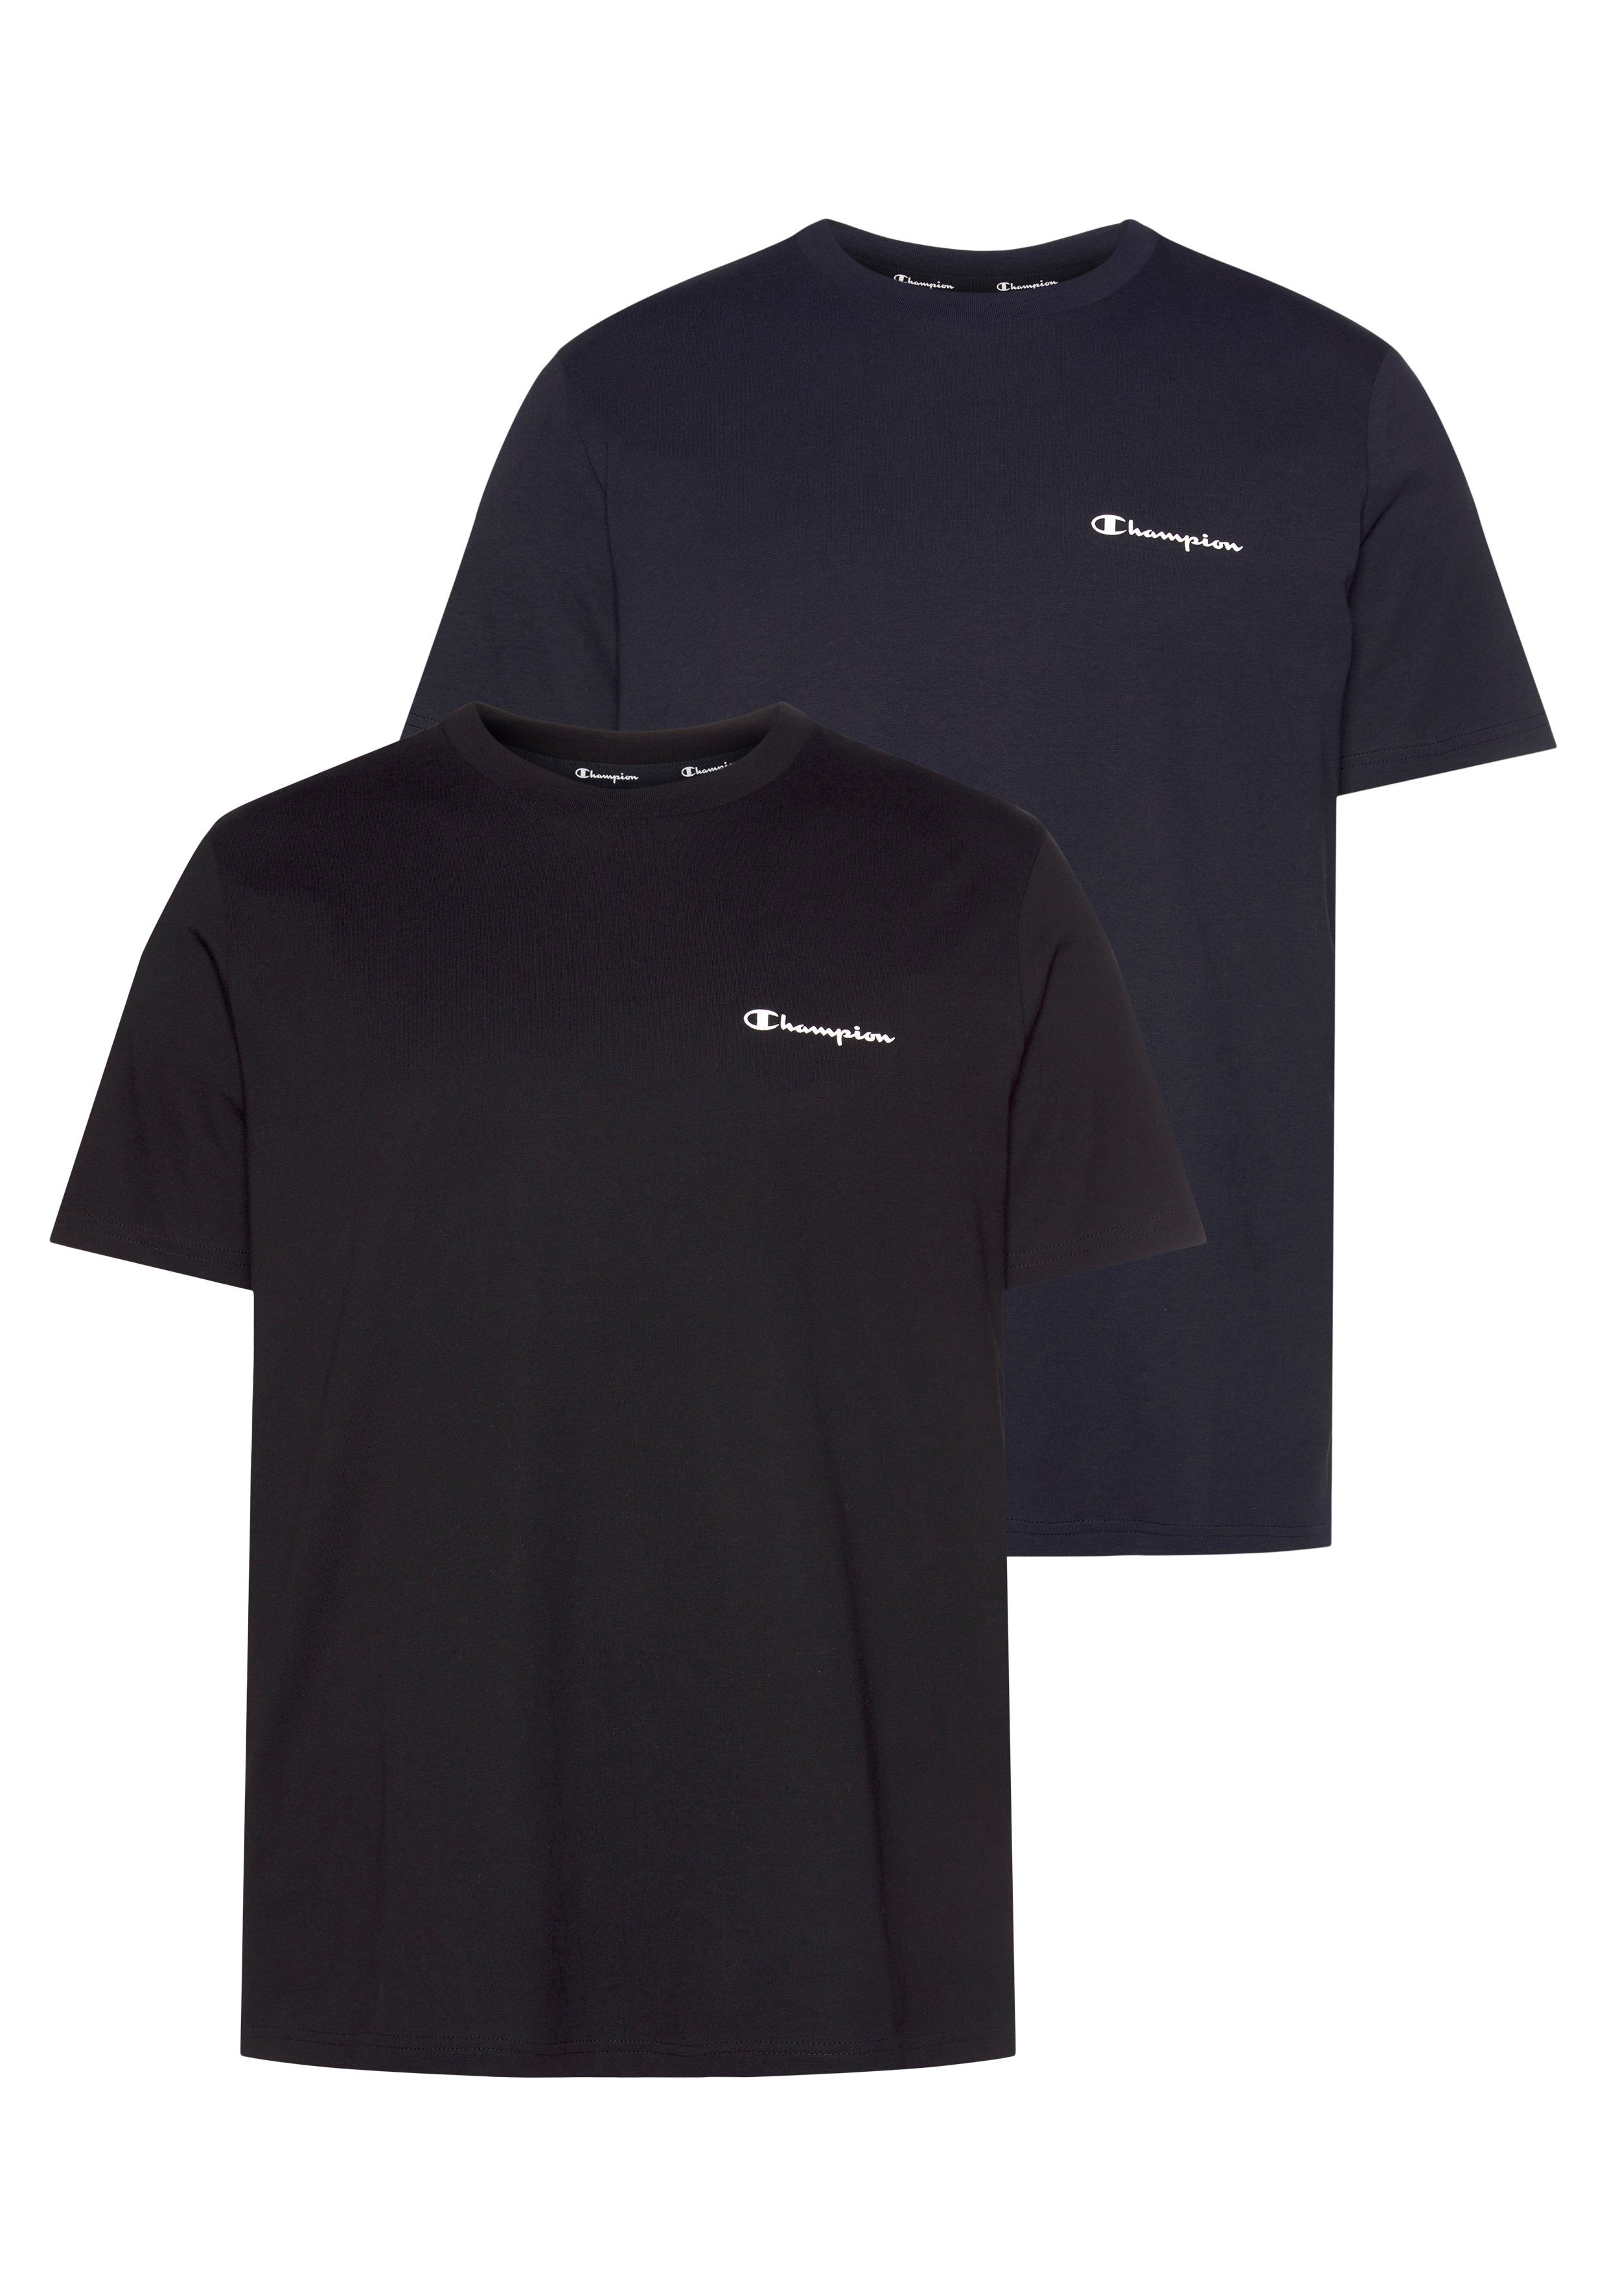 2er-Pack) T-Shirt Champion (Packung, marine, schwarz